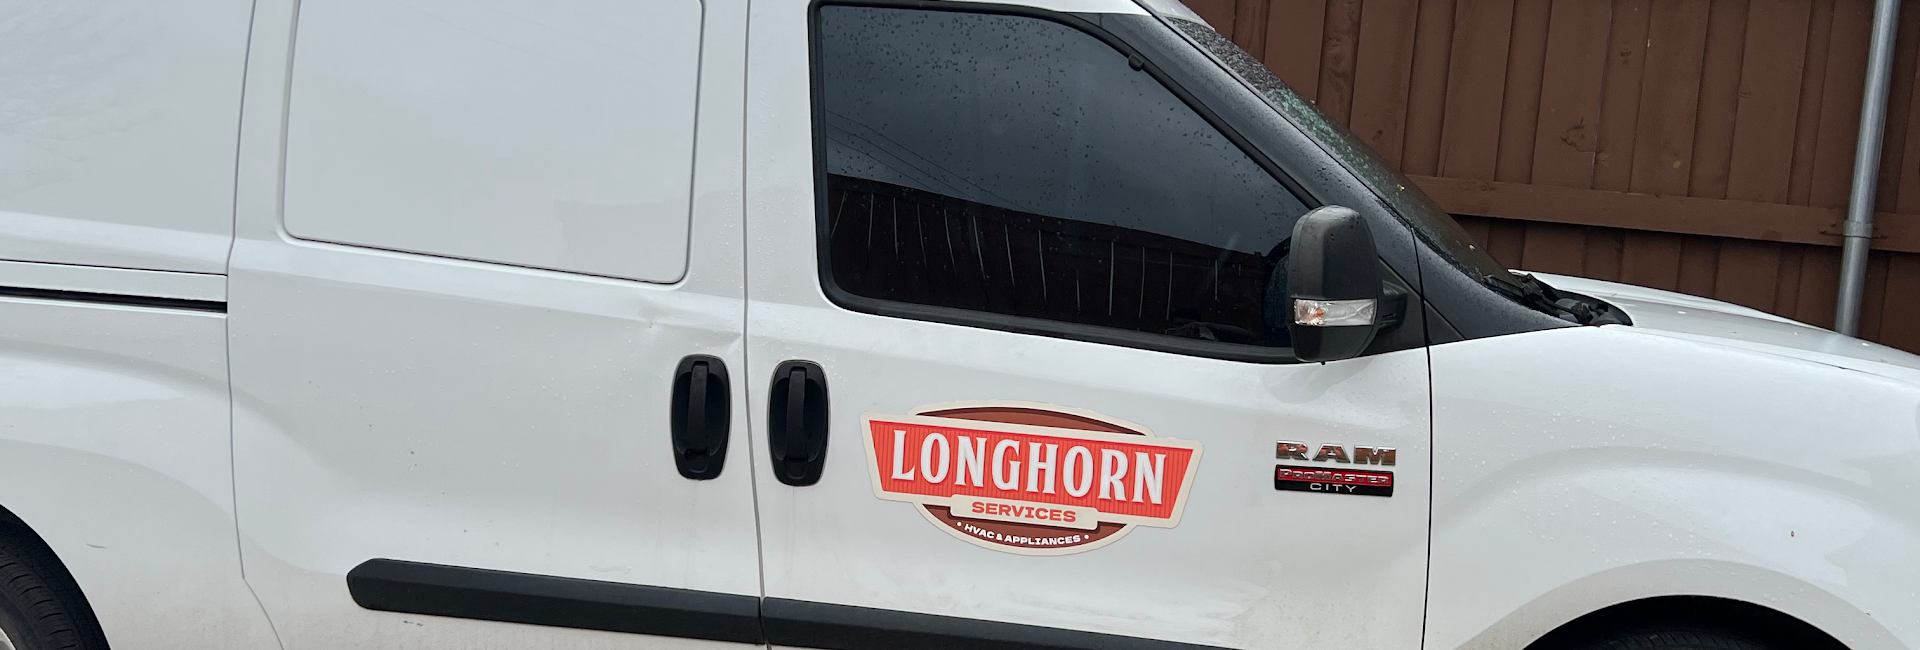 Longhorn Services: HVAC & Appliance Repair 2